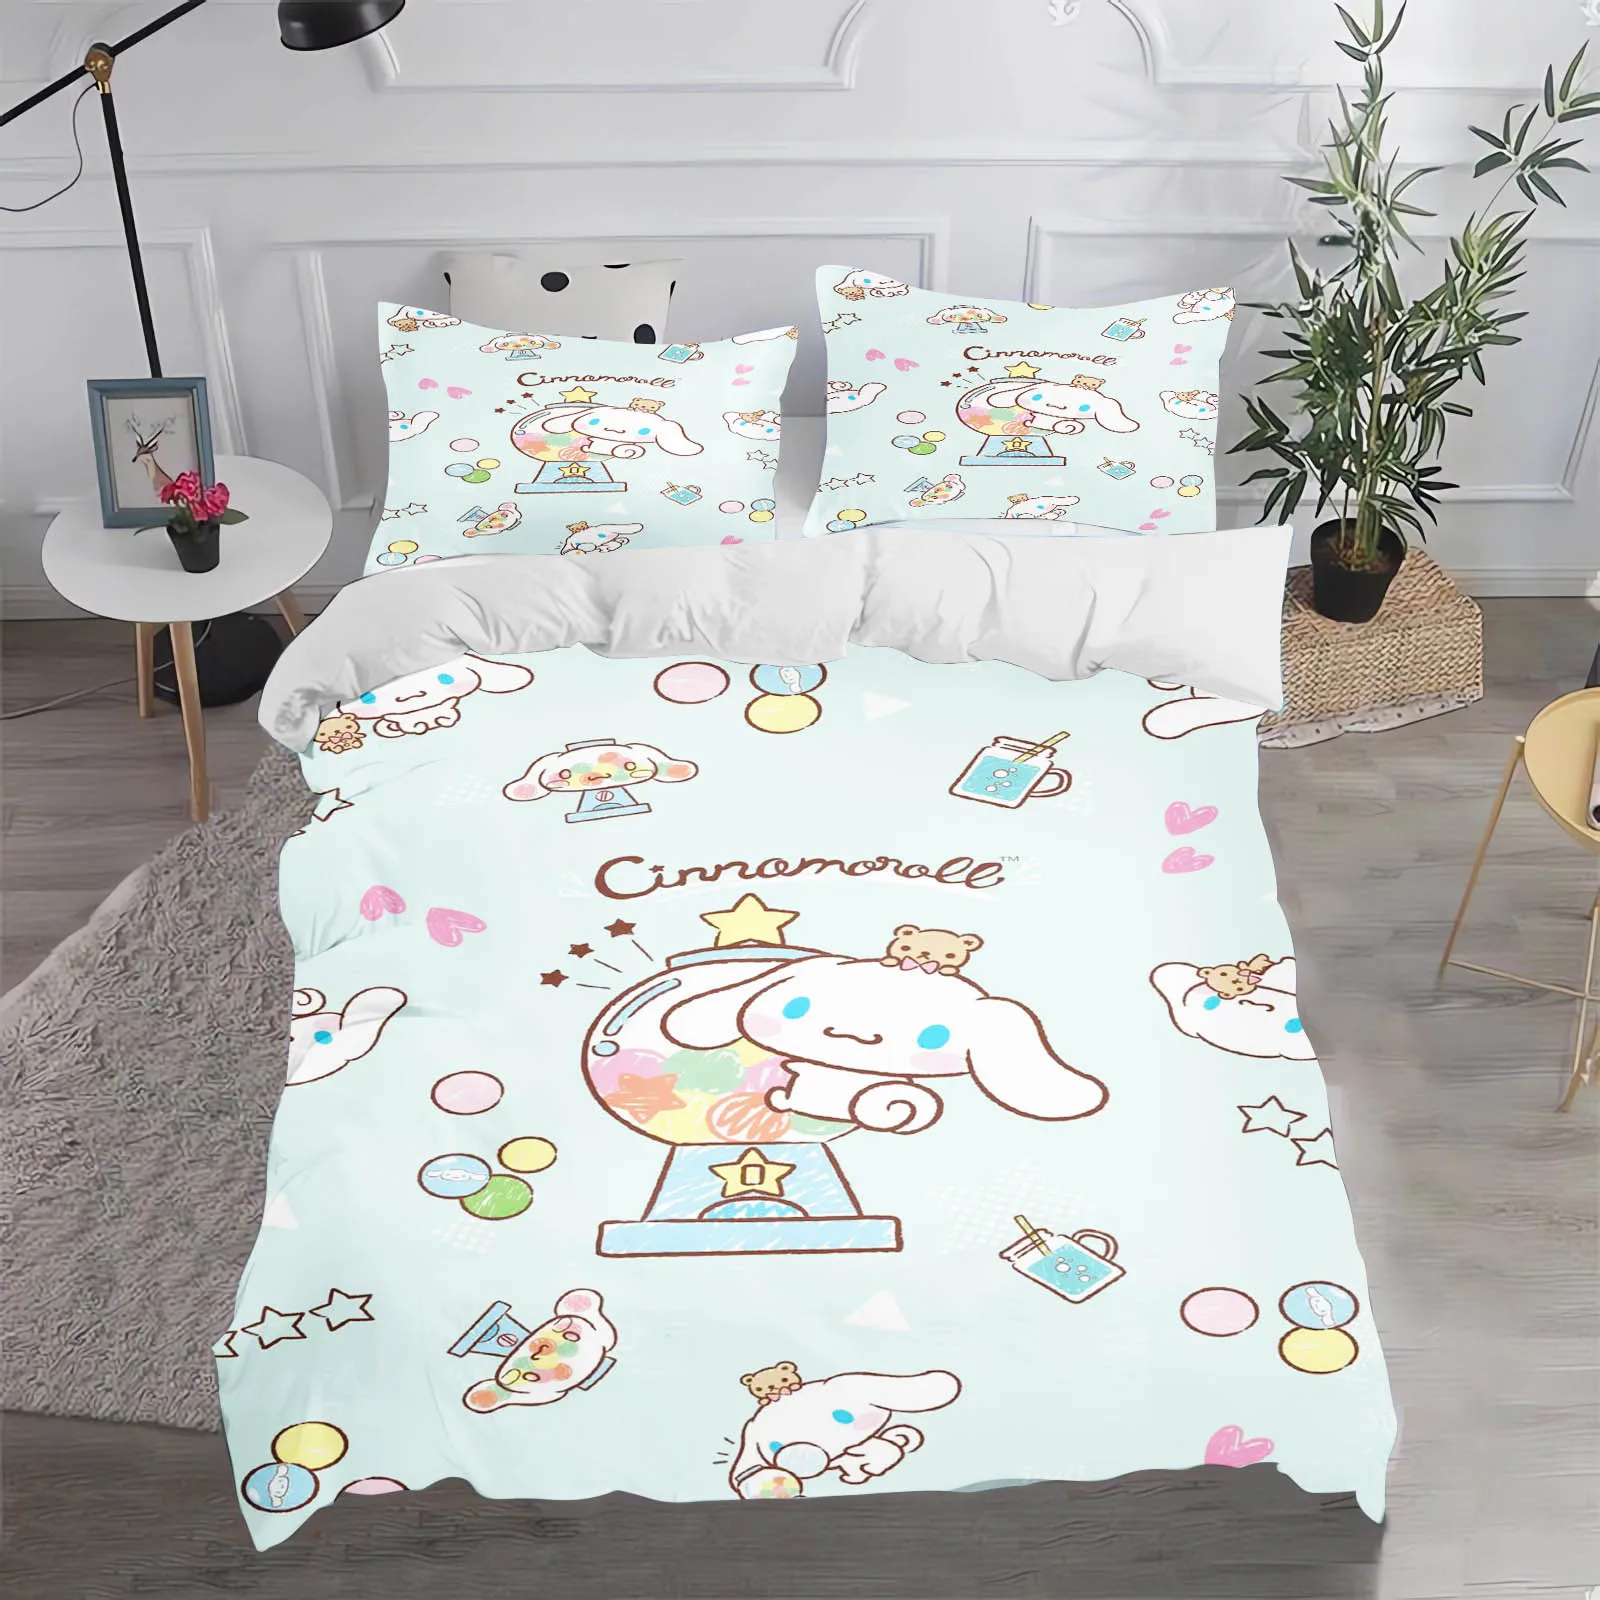 

Cinnamon Dog Sanrio Double Duvet Cover Set Bedding 3-Piece Set 1 Quilt Cover 3D Children'S Suitable For Children And Adults Hom